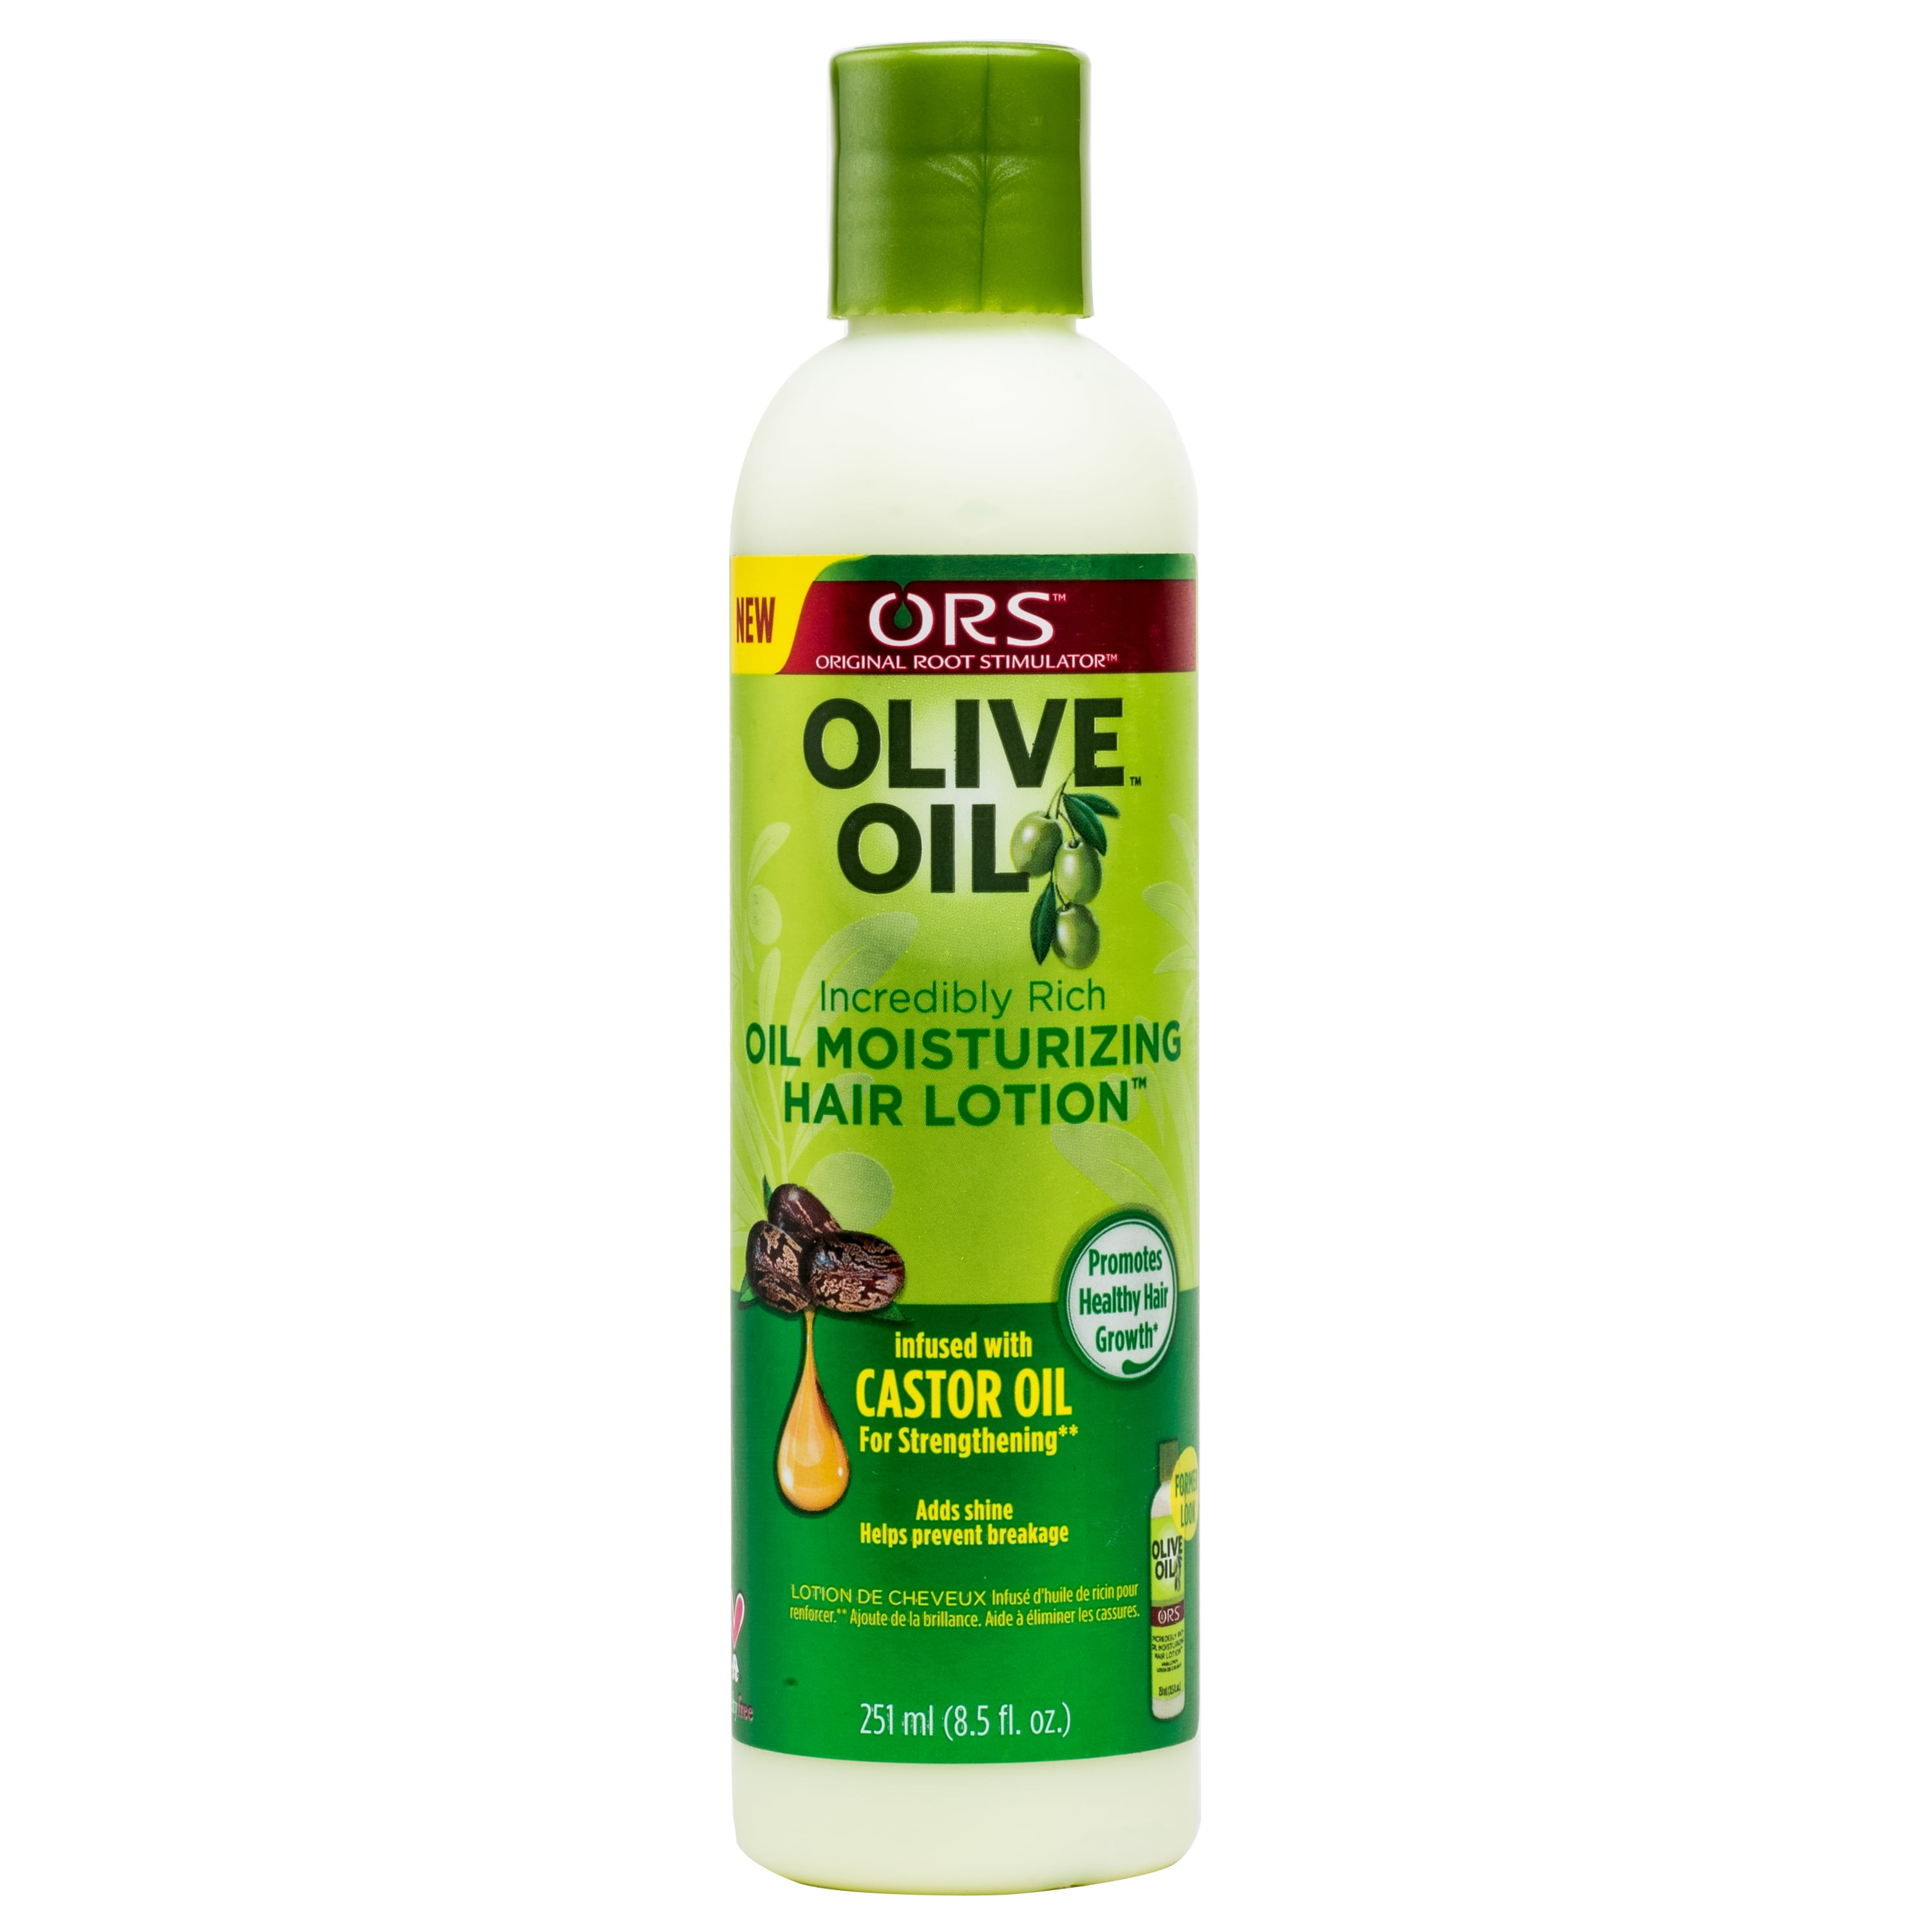 Olive oil hair